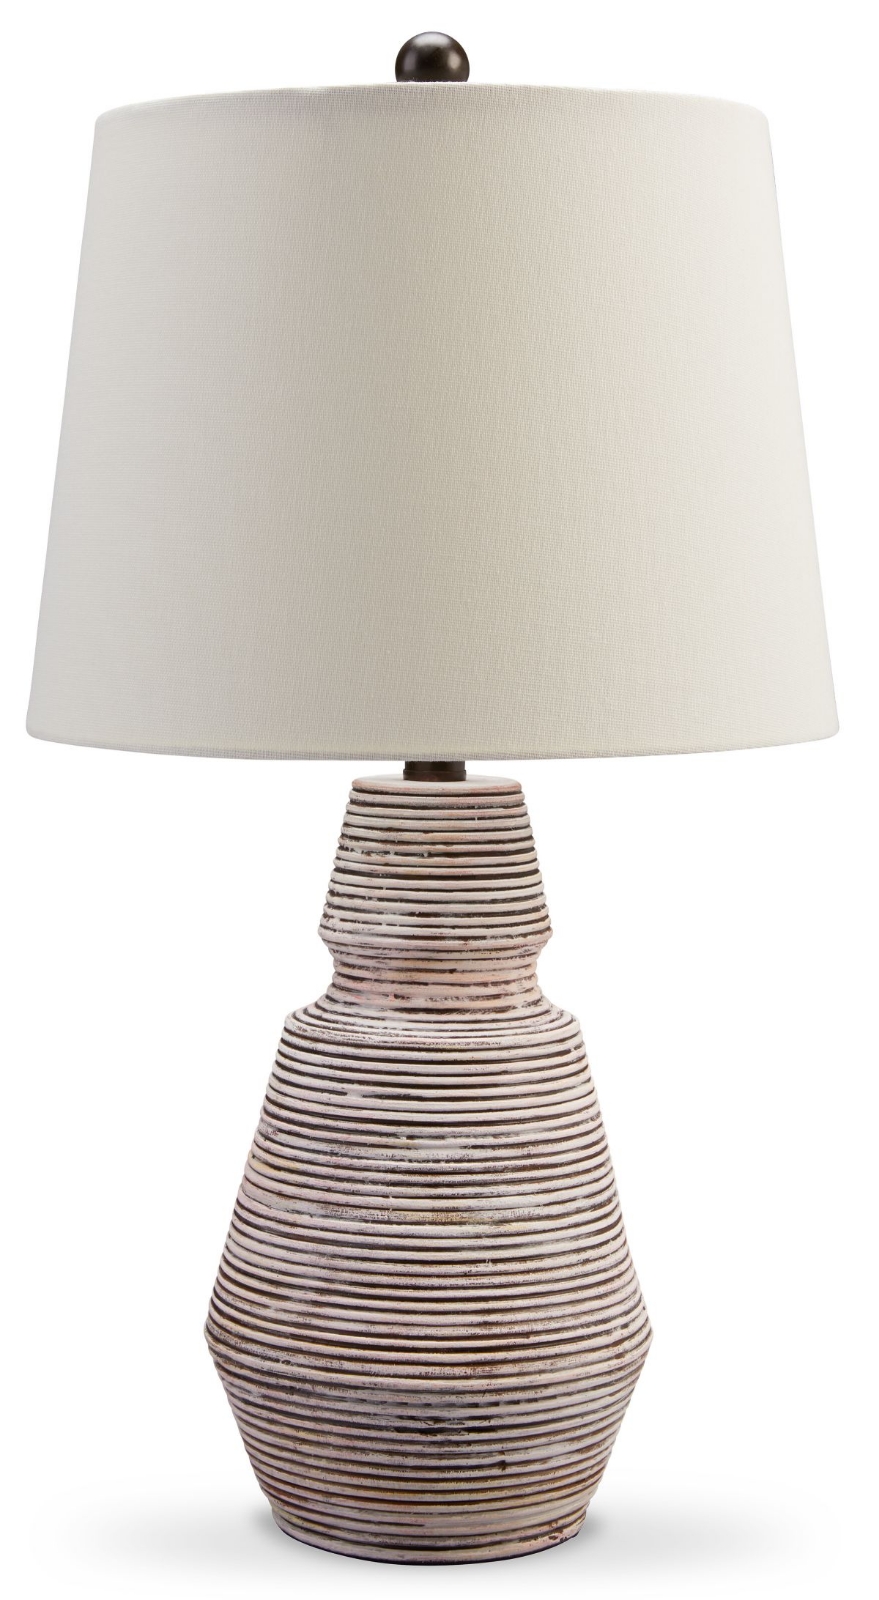 Picture of Jairburns Table Lamp